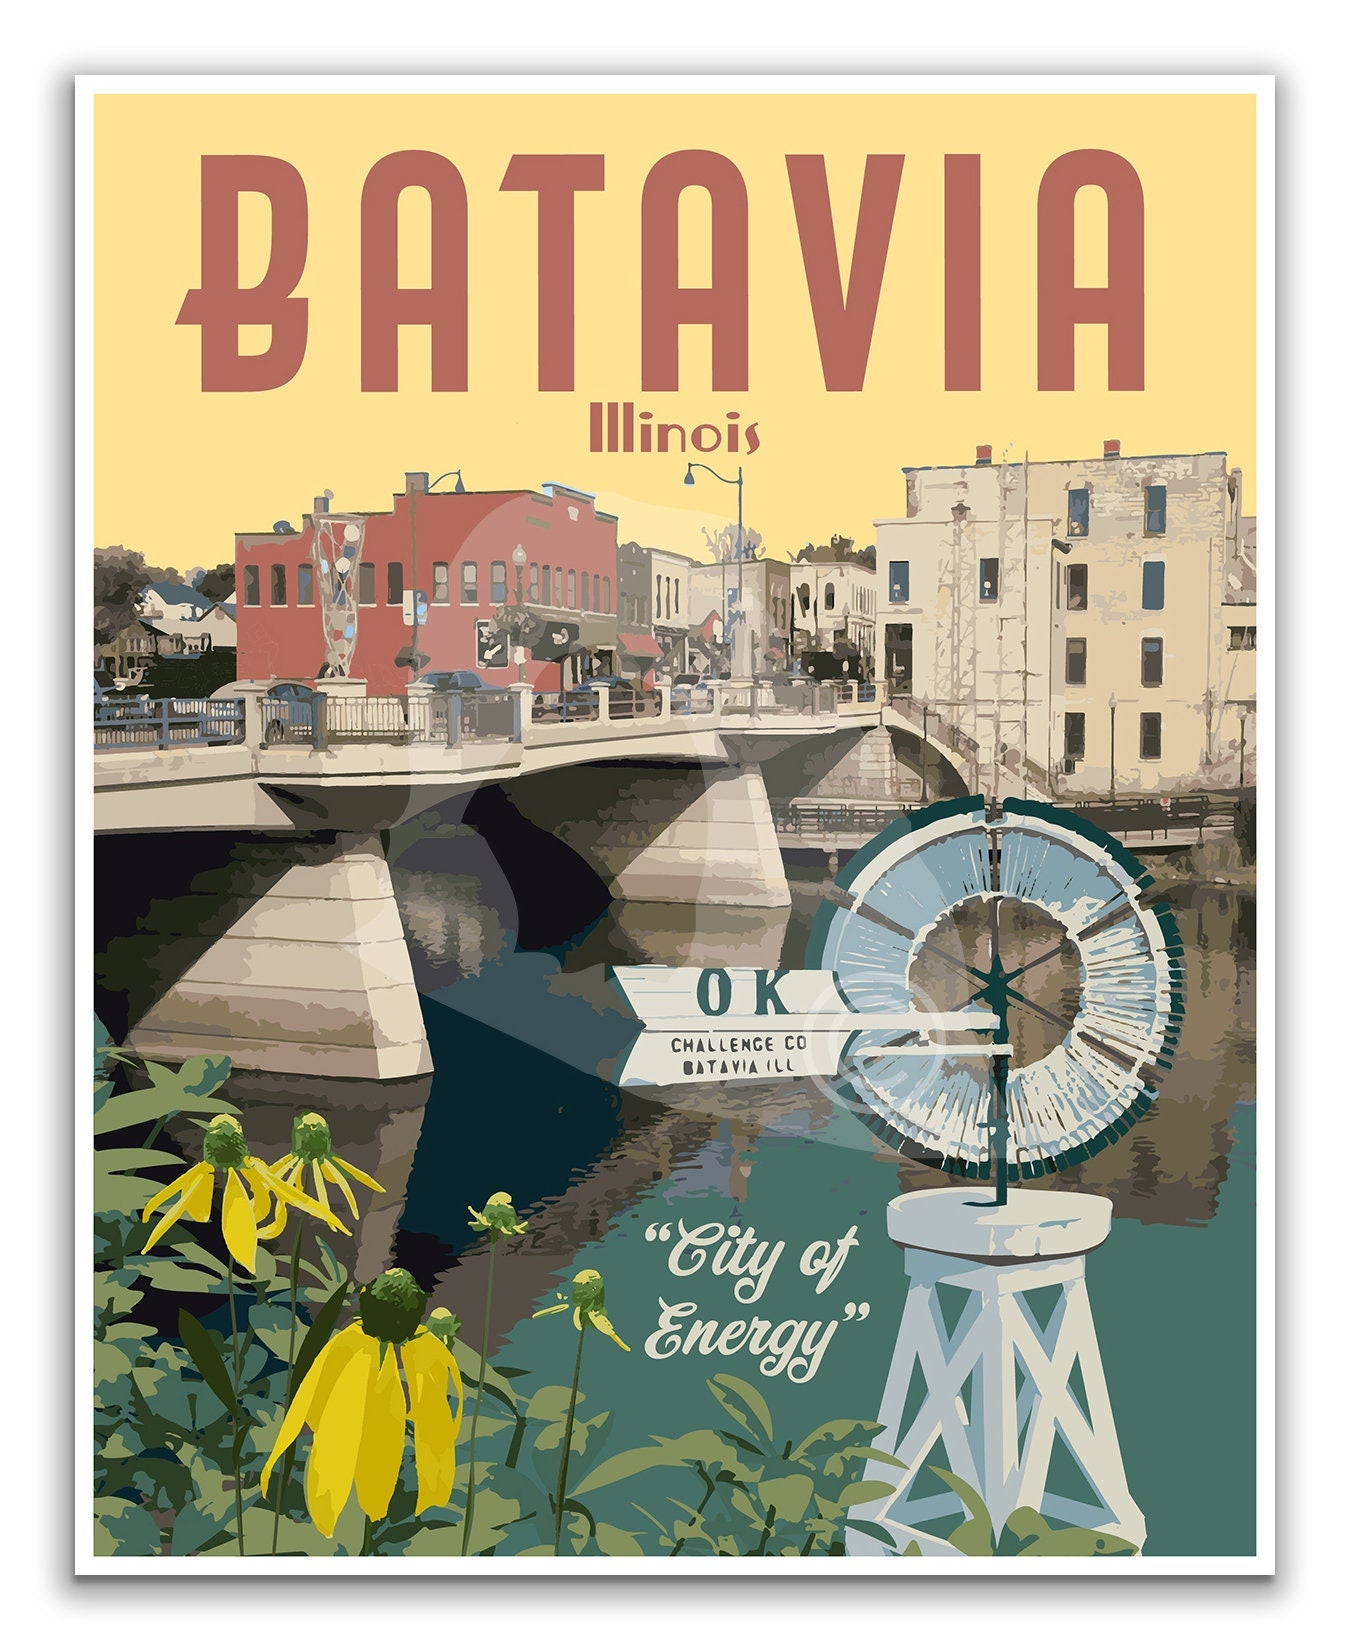 Batavia Illinois Travel Poster, Batavia Illinois Print, Vintage Travel Poster